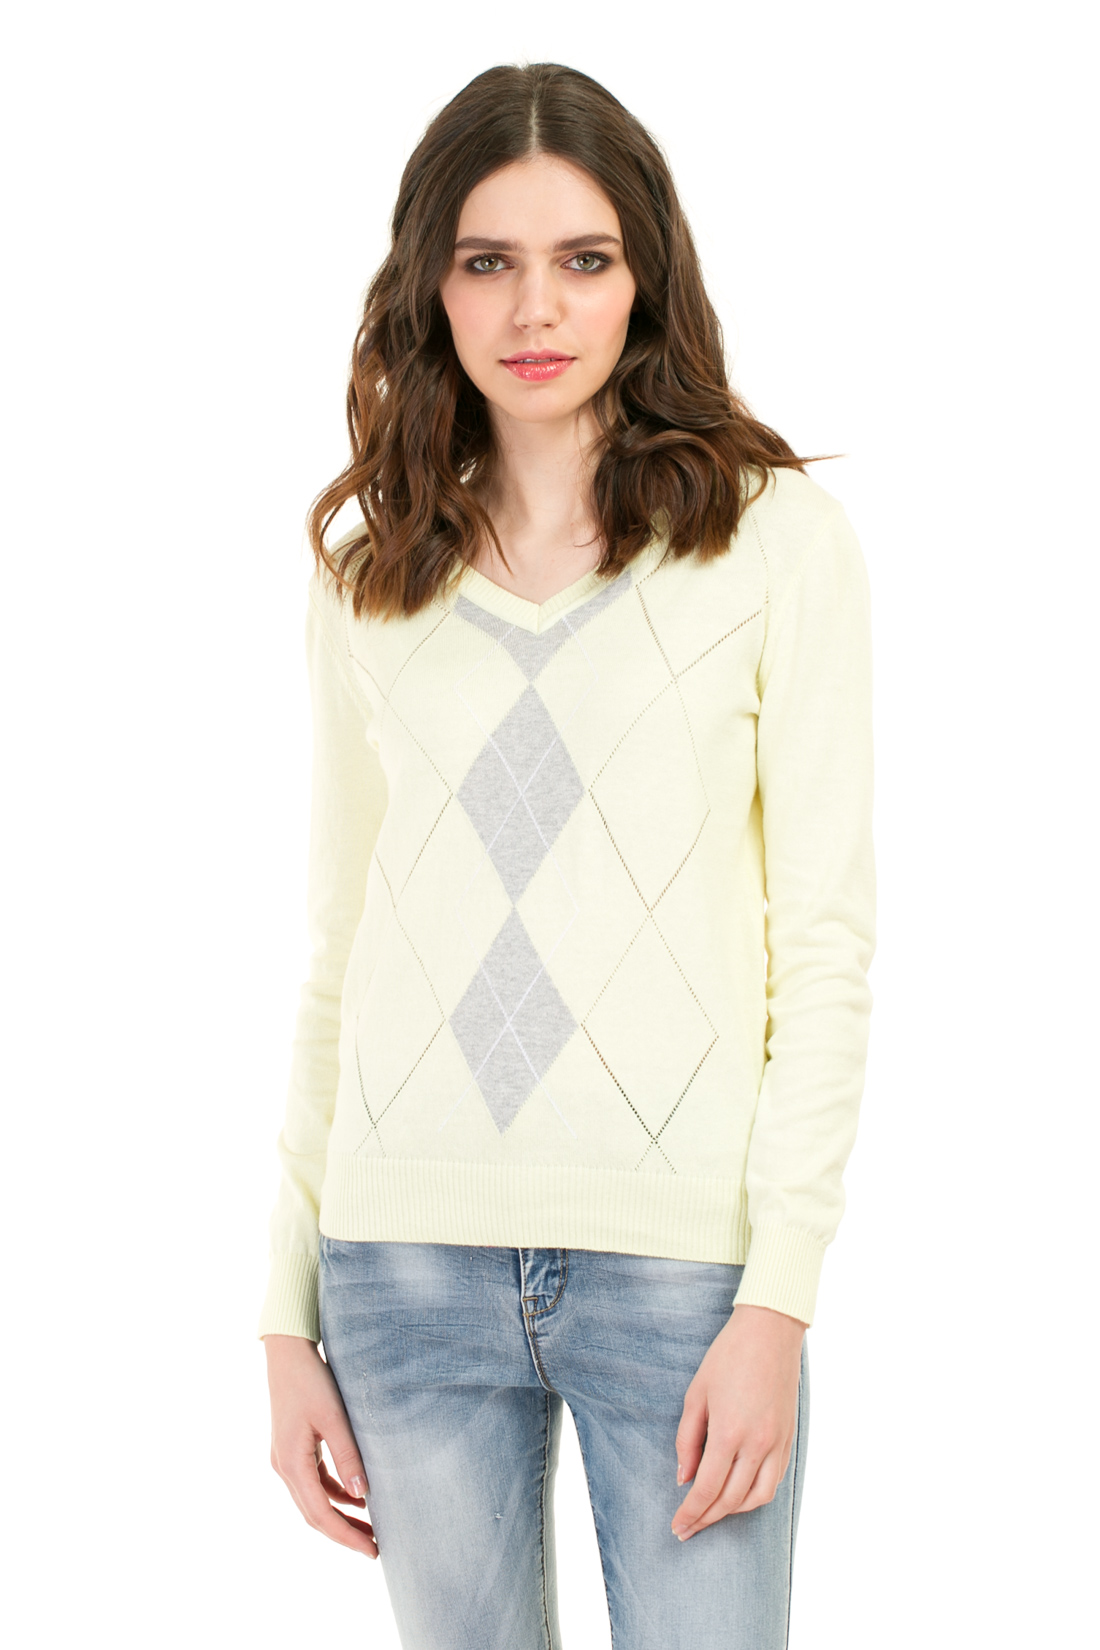 Базовый пуловер с ромбами (арт. baon B137204), размер L, цвет белый Базовый пуловер с ромбами (арт. baon B137204) - фото 1